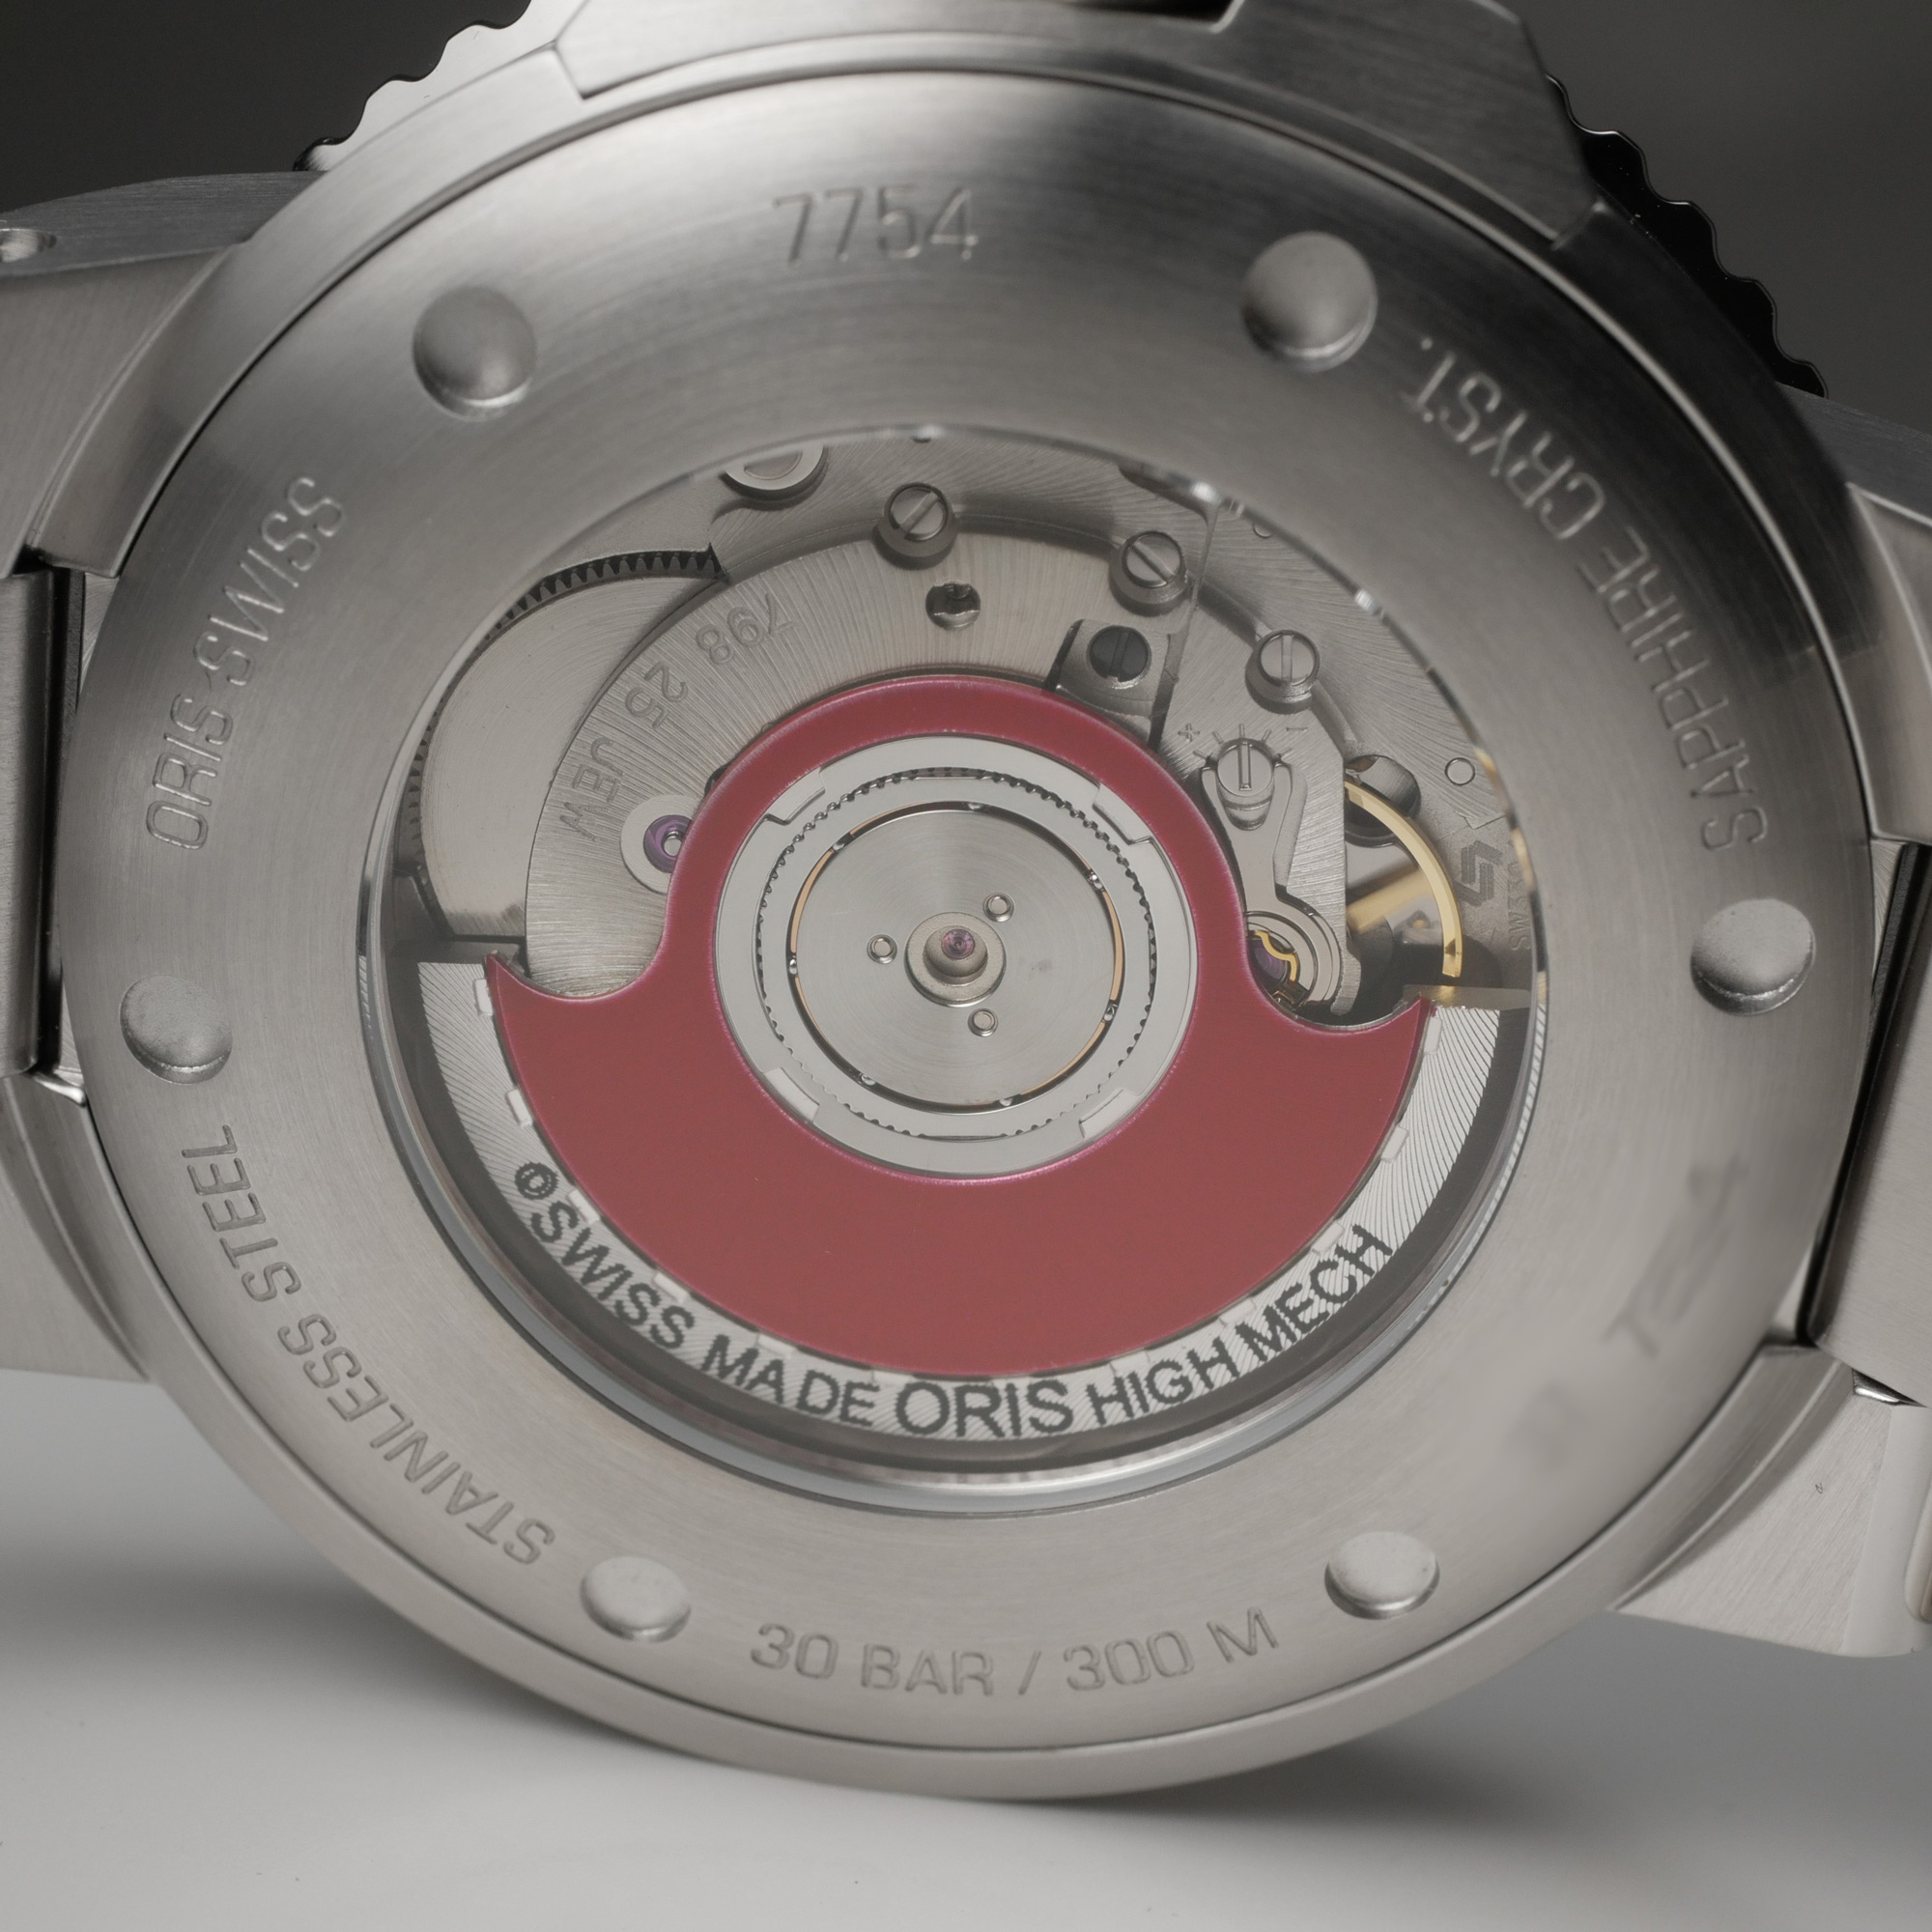 Oris Aquis GMT Date 43.50mm Men's Stainless Steel Automatic Swiss Watch 01 798 7754 4135-07 8 24 05PEB